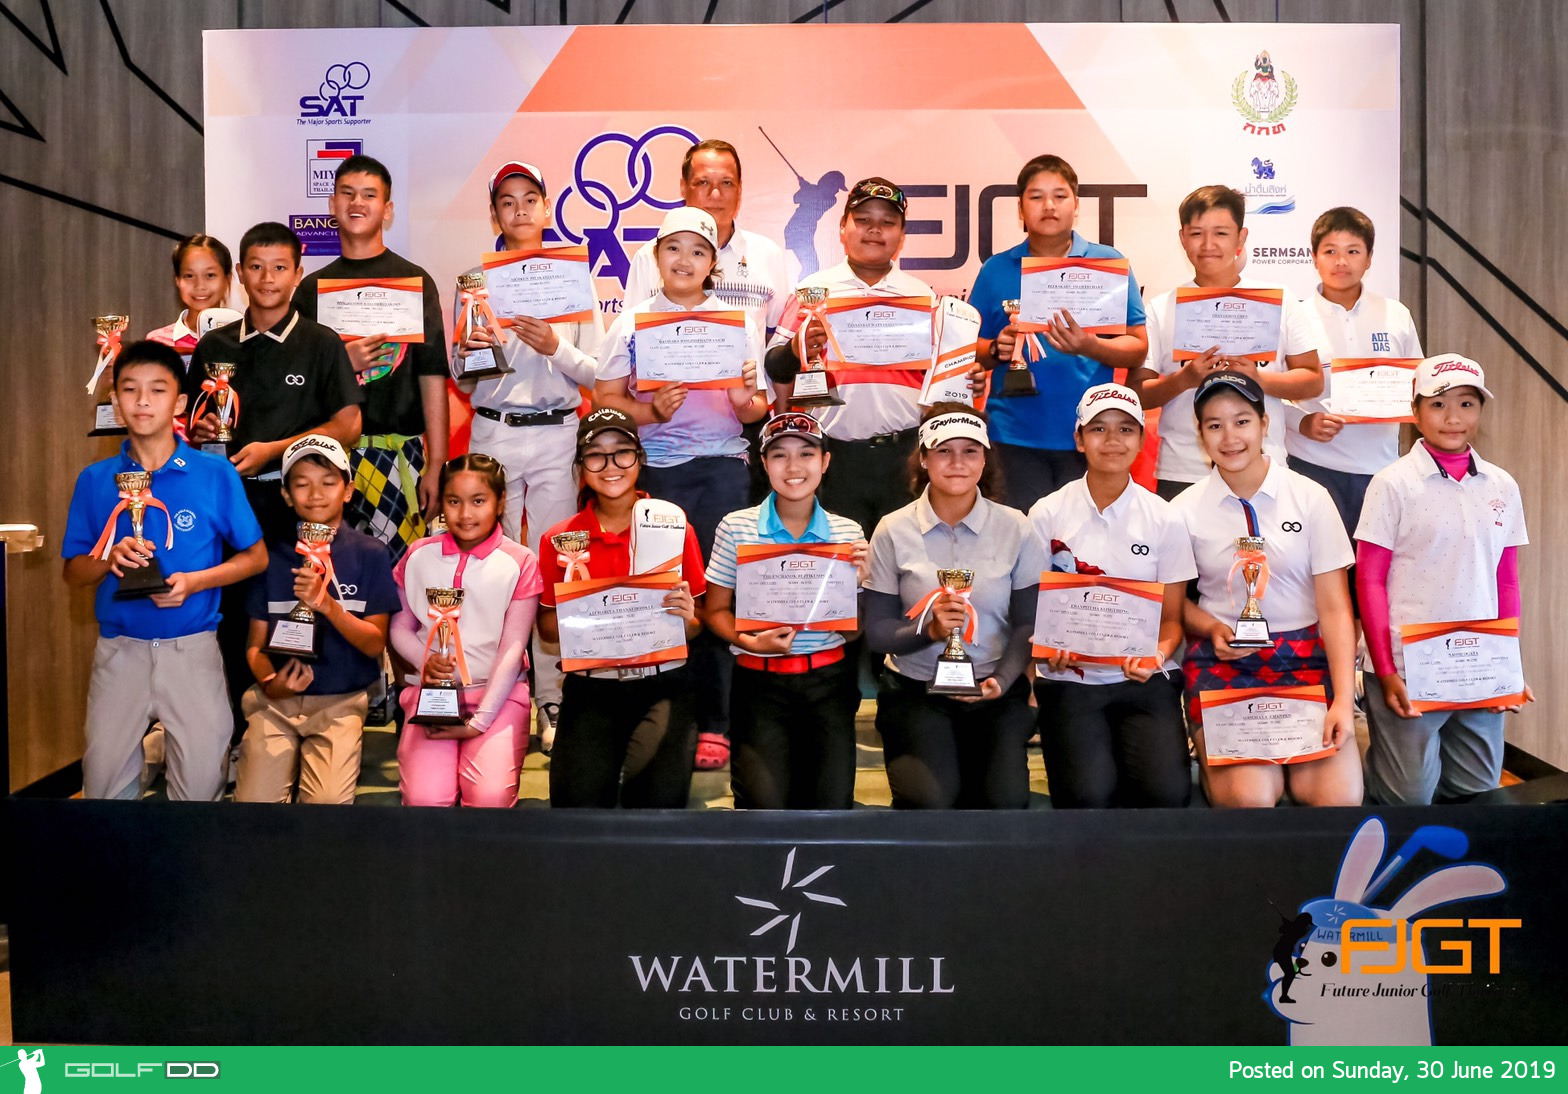 "Future Junior Golf Thailand" จัดการแข่งขันกอล์ฟเยาวชนรายการ SAT-Future Junior Golf Thailand 2019 